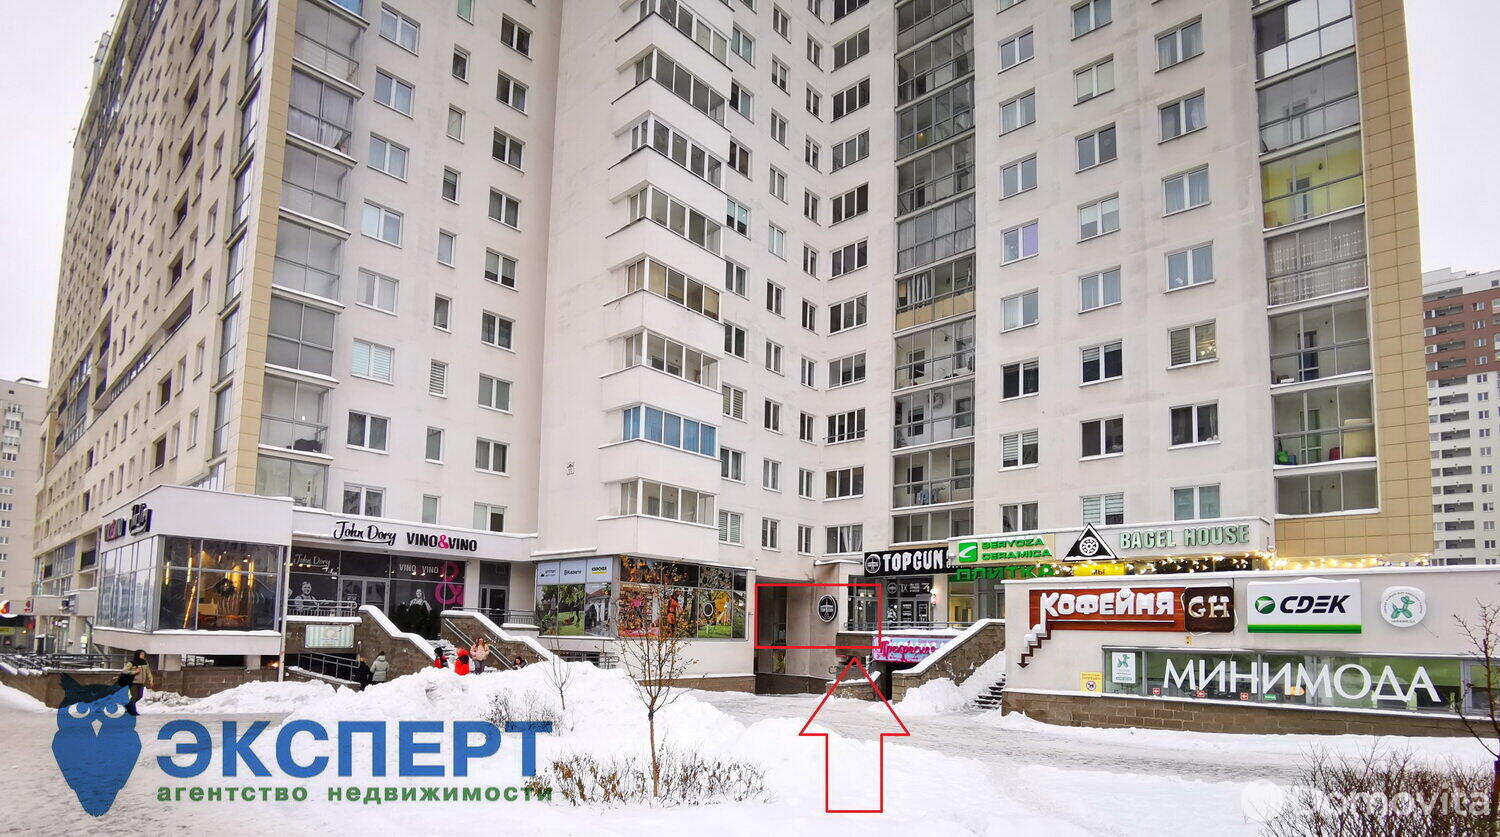 Аренда торговой точки на пр-т Дзержинского, д. 11 в Минске, 7212BYN, код 964452 - фото 2